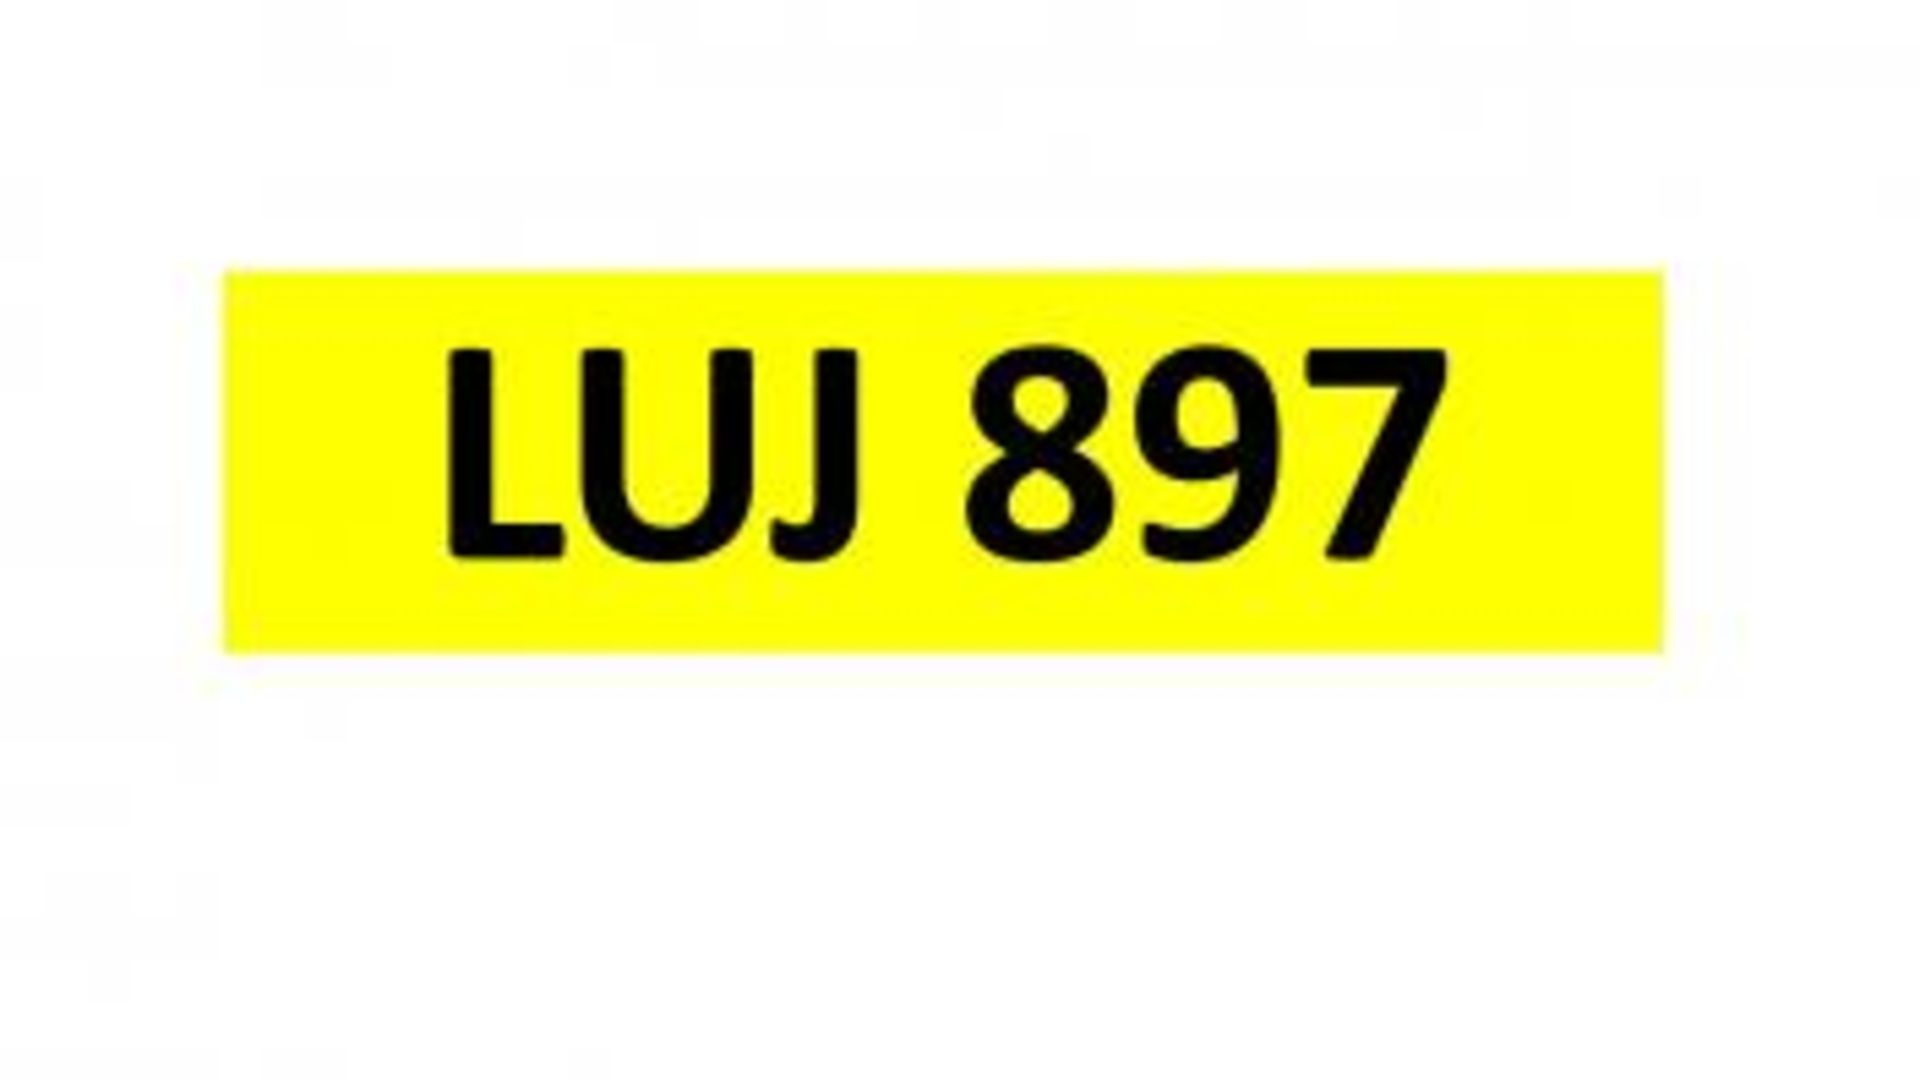 Registration - LUJ 897